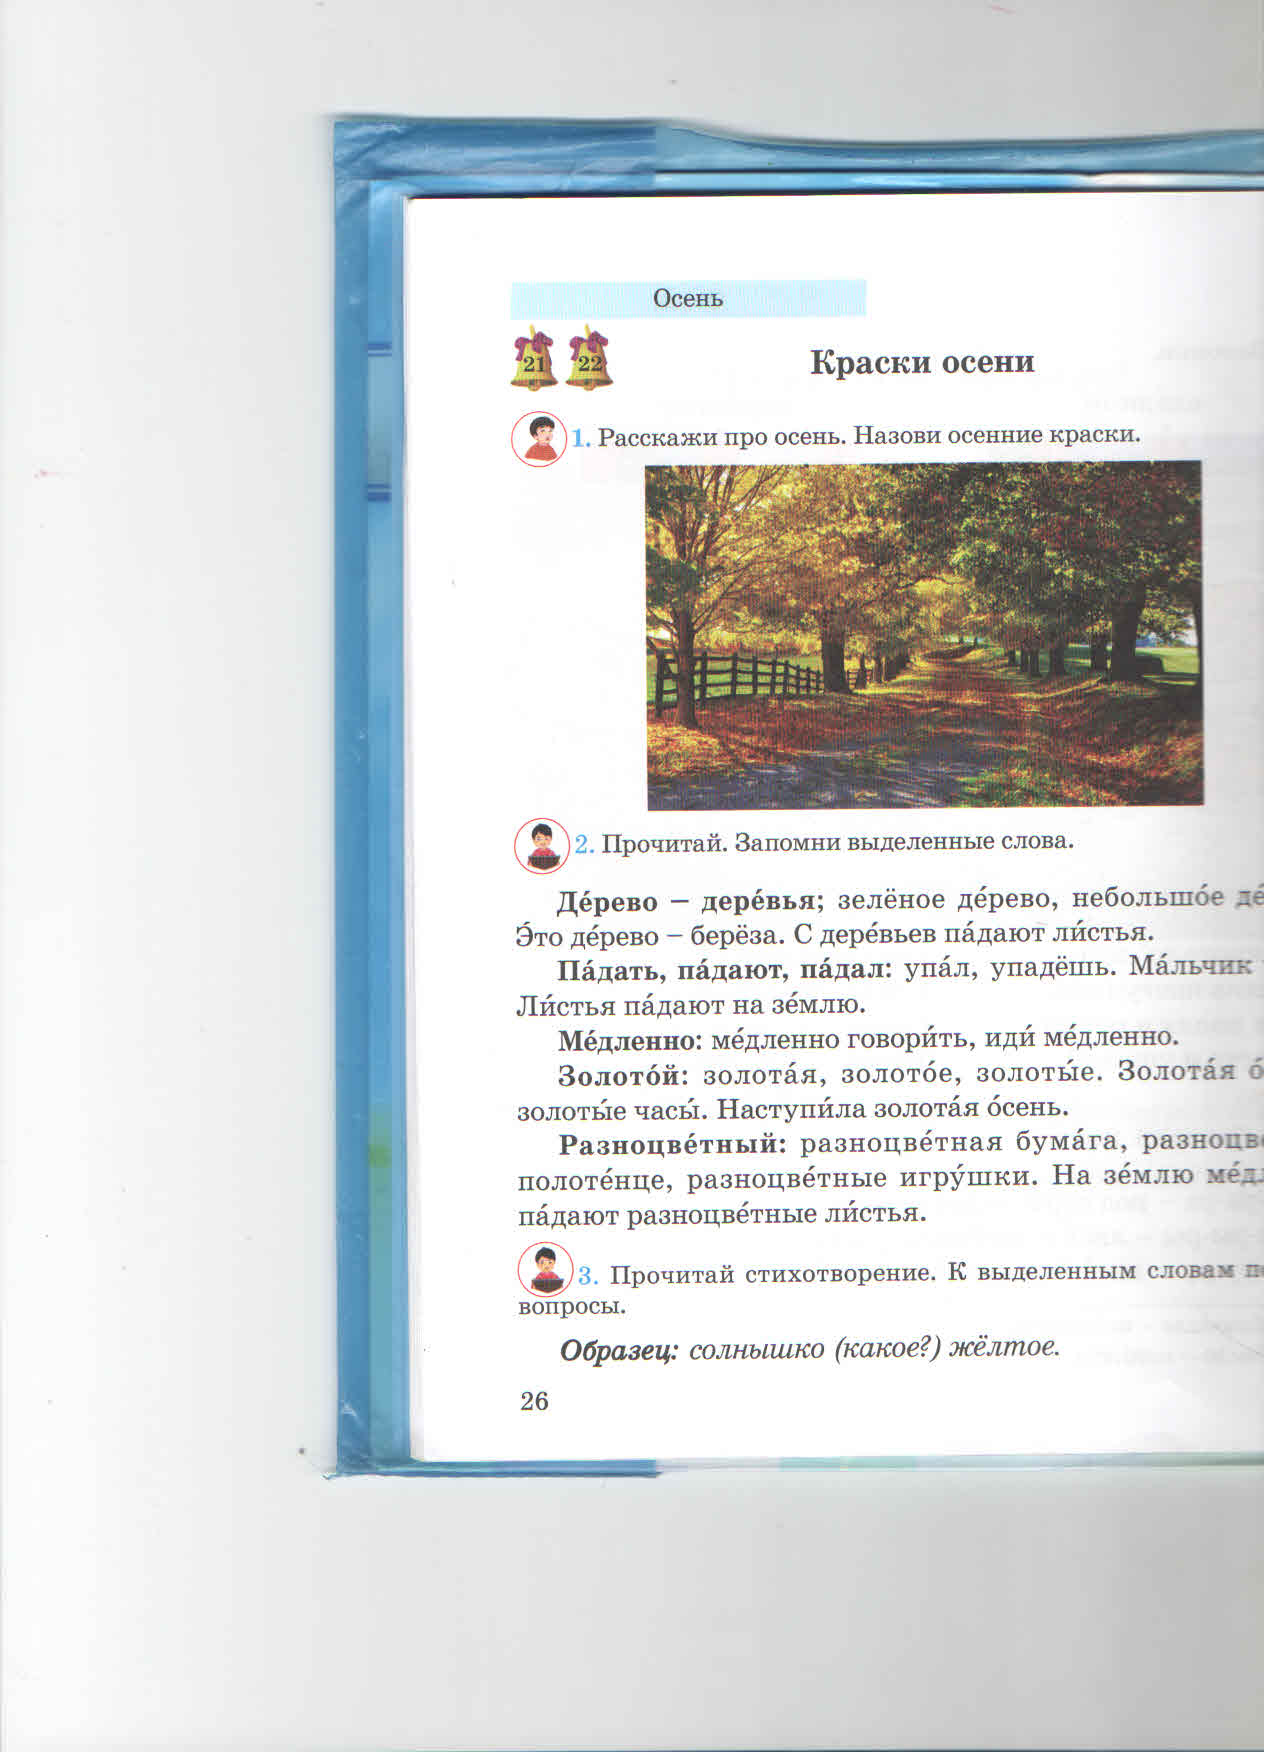 Документ по русскому языку на тему Краски осени (3 класс)